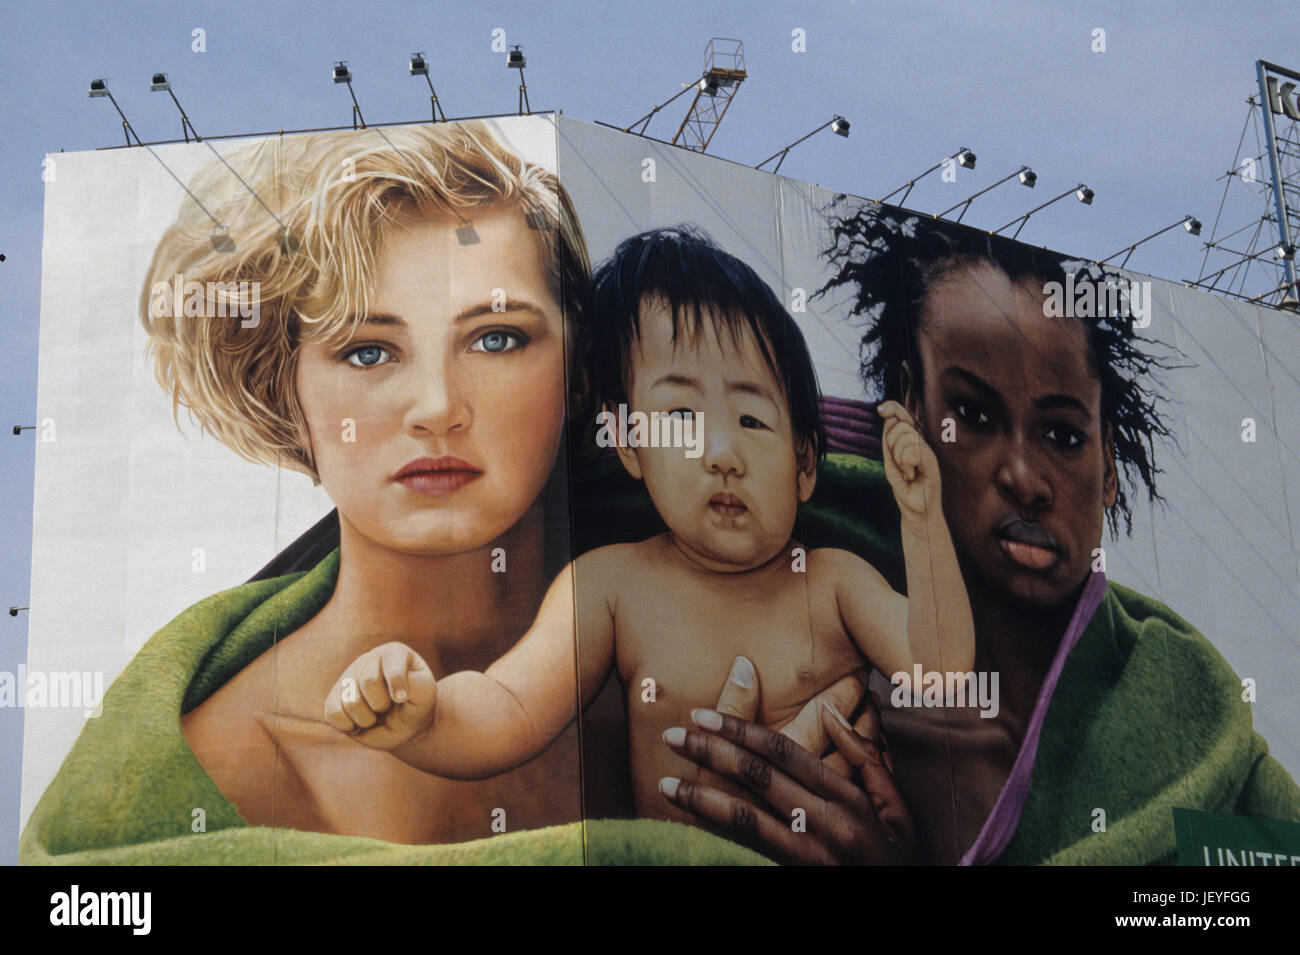 La Benetton adv da Oliviero Toscani Foto stock - Alamy